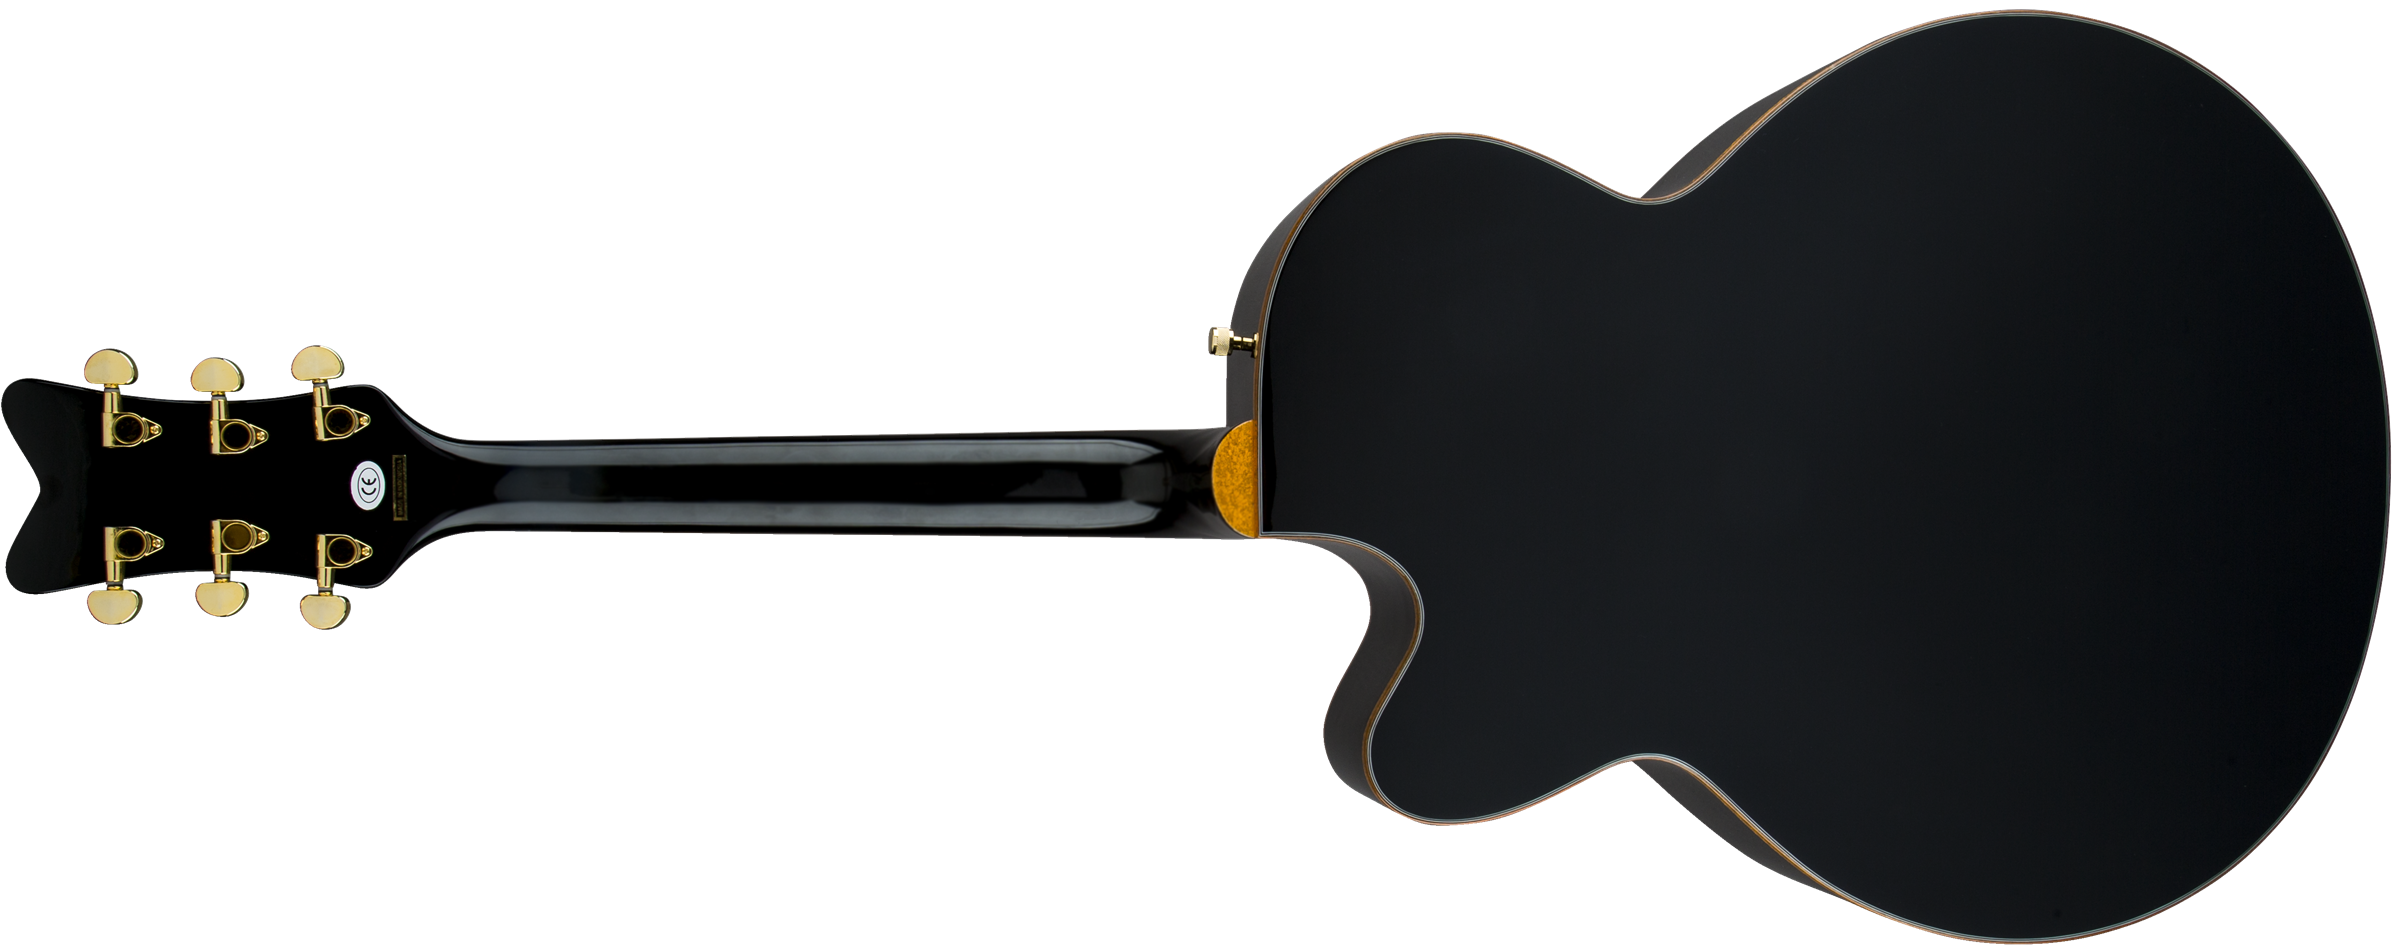 Gretsch G5022cbfe Rancher Falcon Jumbo Cw Epicea Erable Rw - Black - Elektroakustische Gitarre - Variation 2